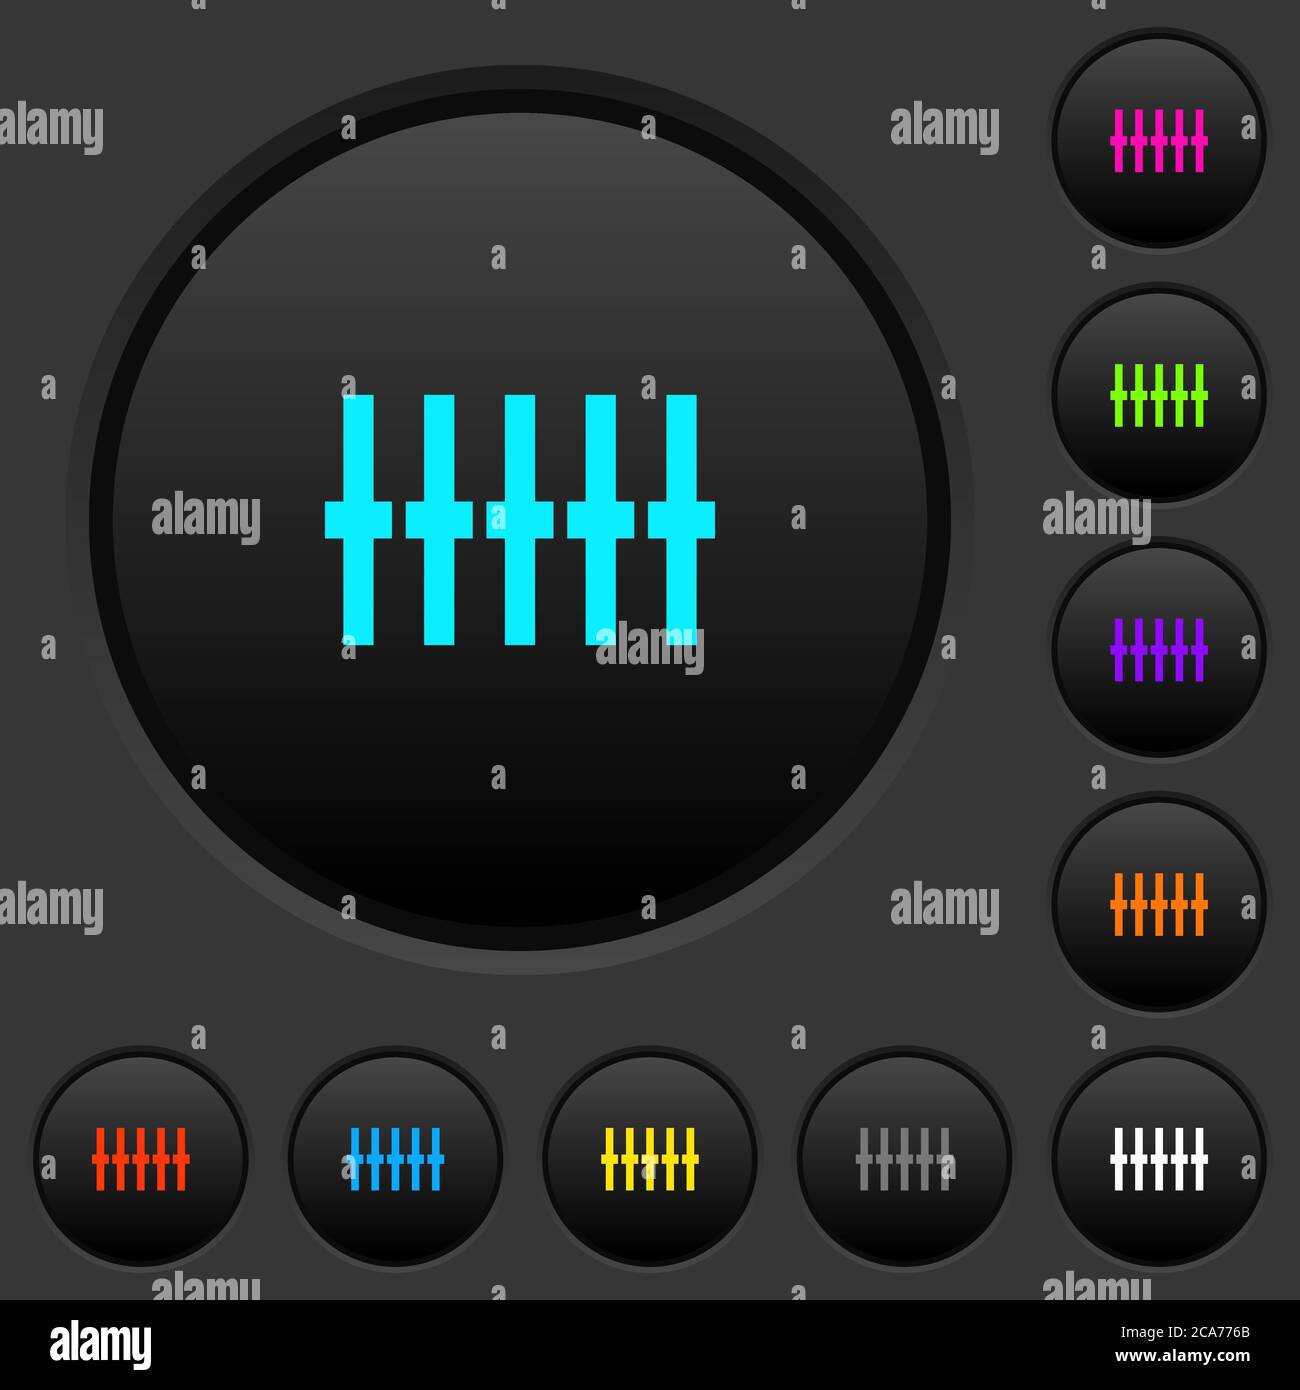 TIC tac toe juego botones pulsadores oscuros con iconos de colores vivos  sobre fondo gris oscuro Imagen Vector de stock - Alamy